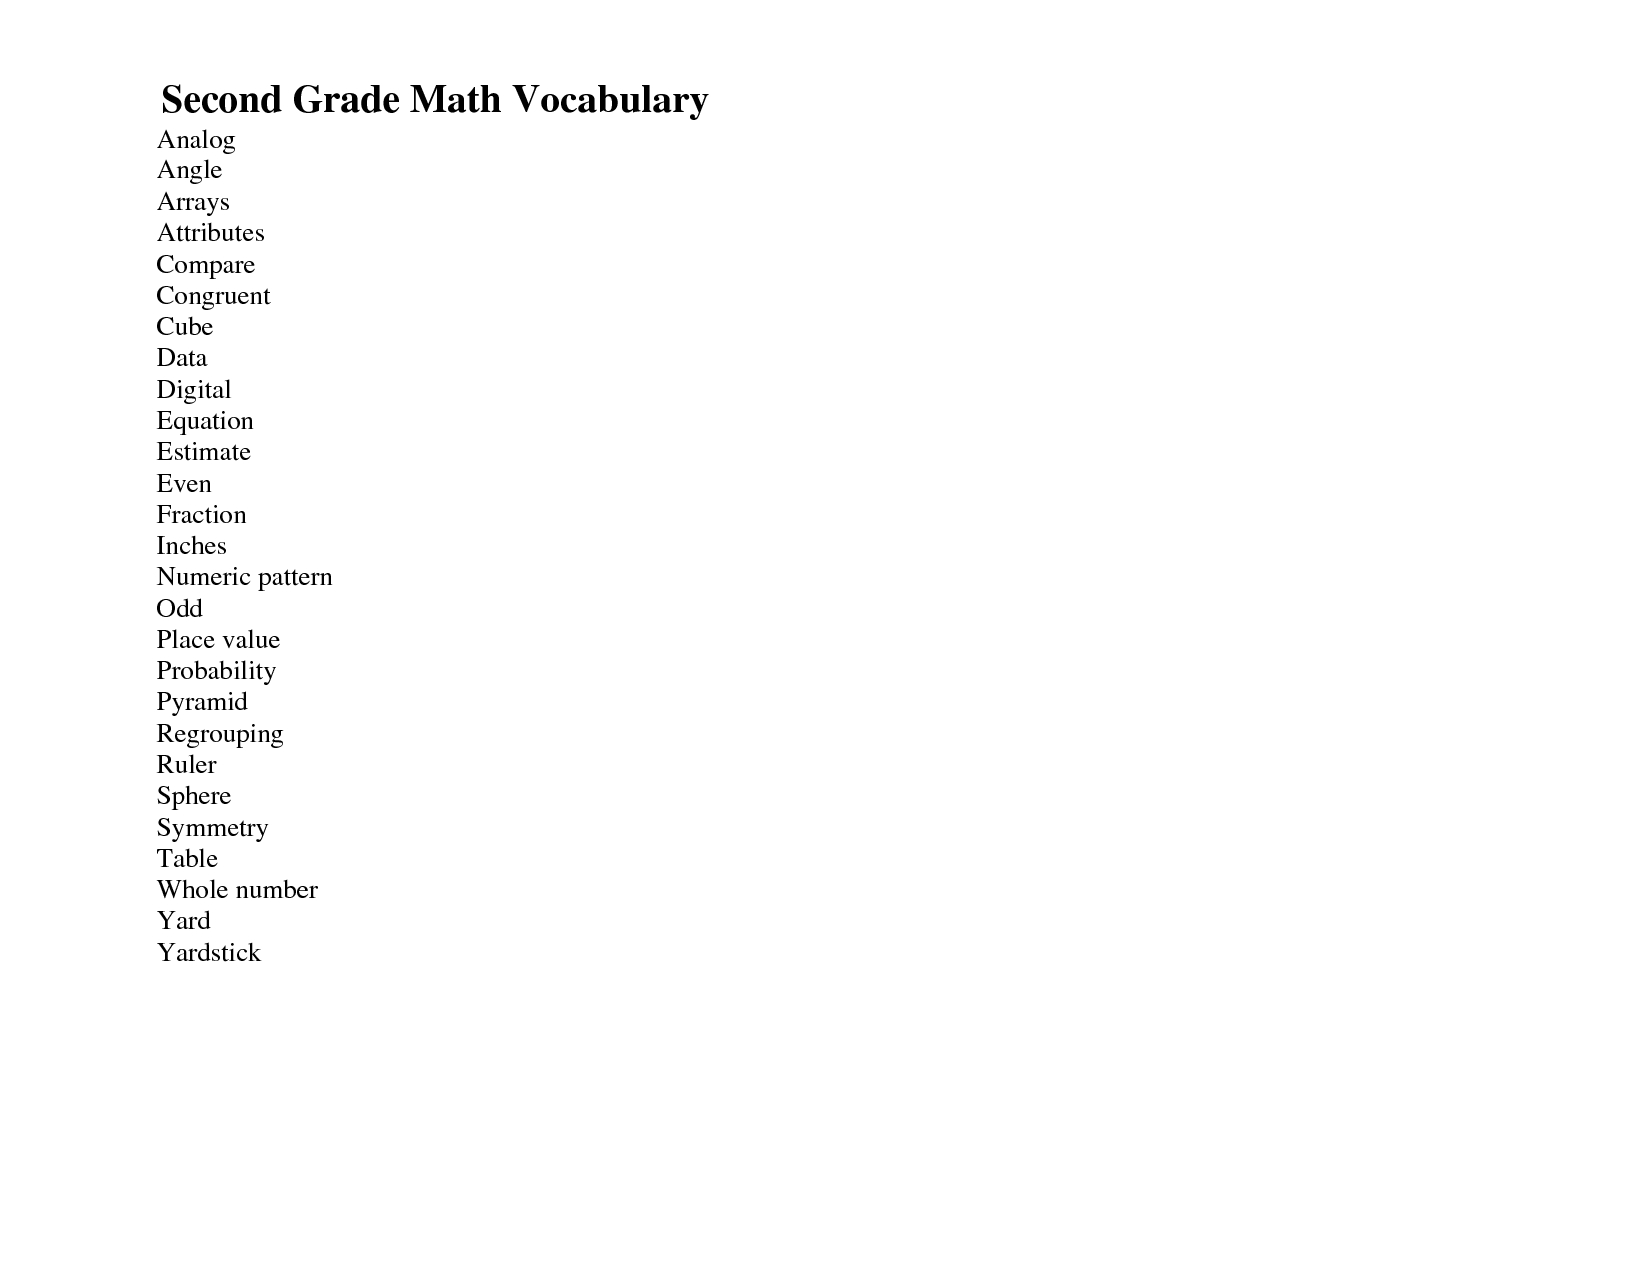 Second Grade Math Vocabulary Image